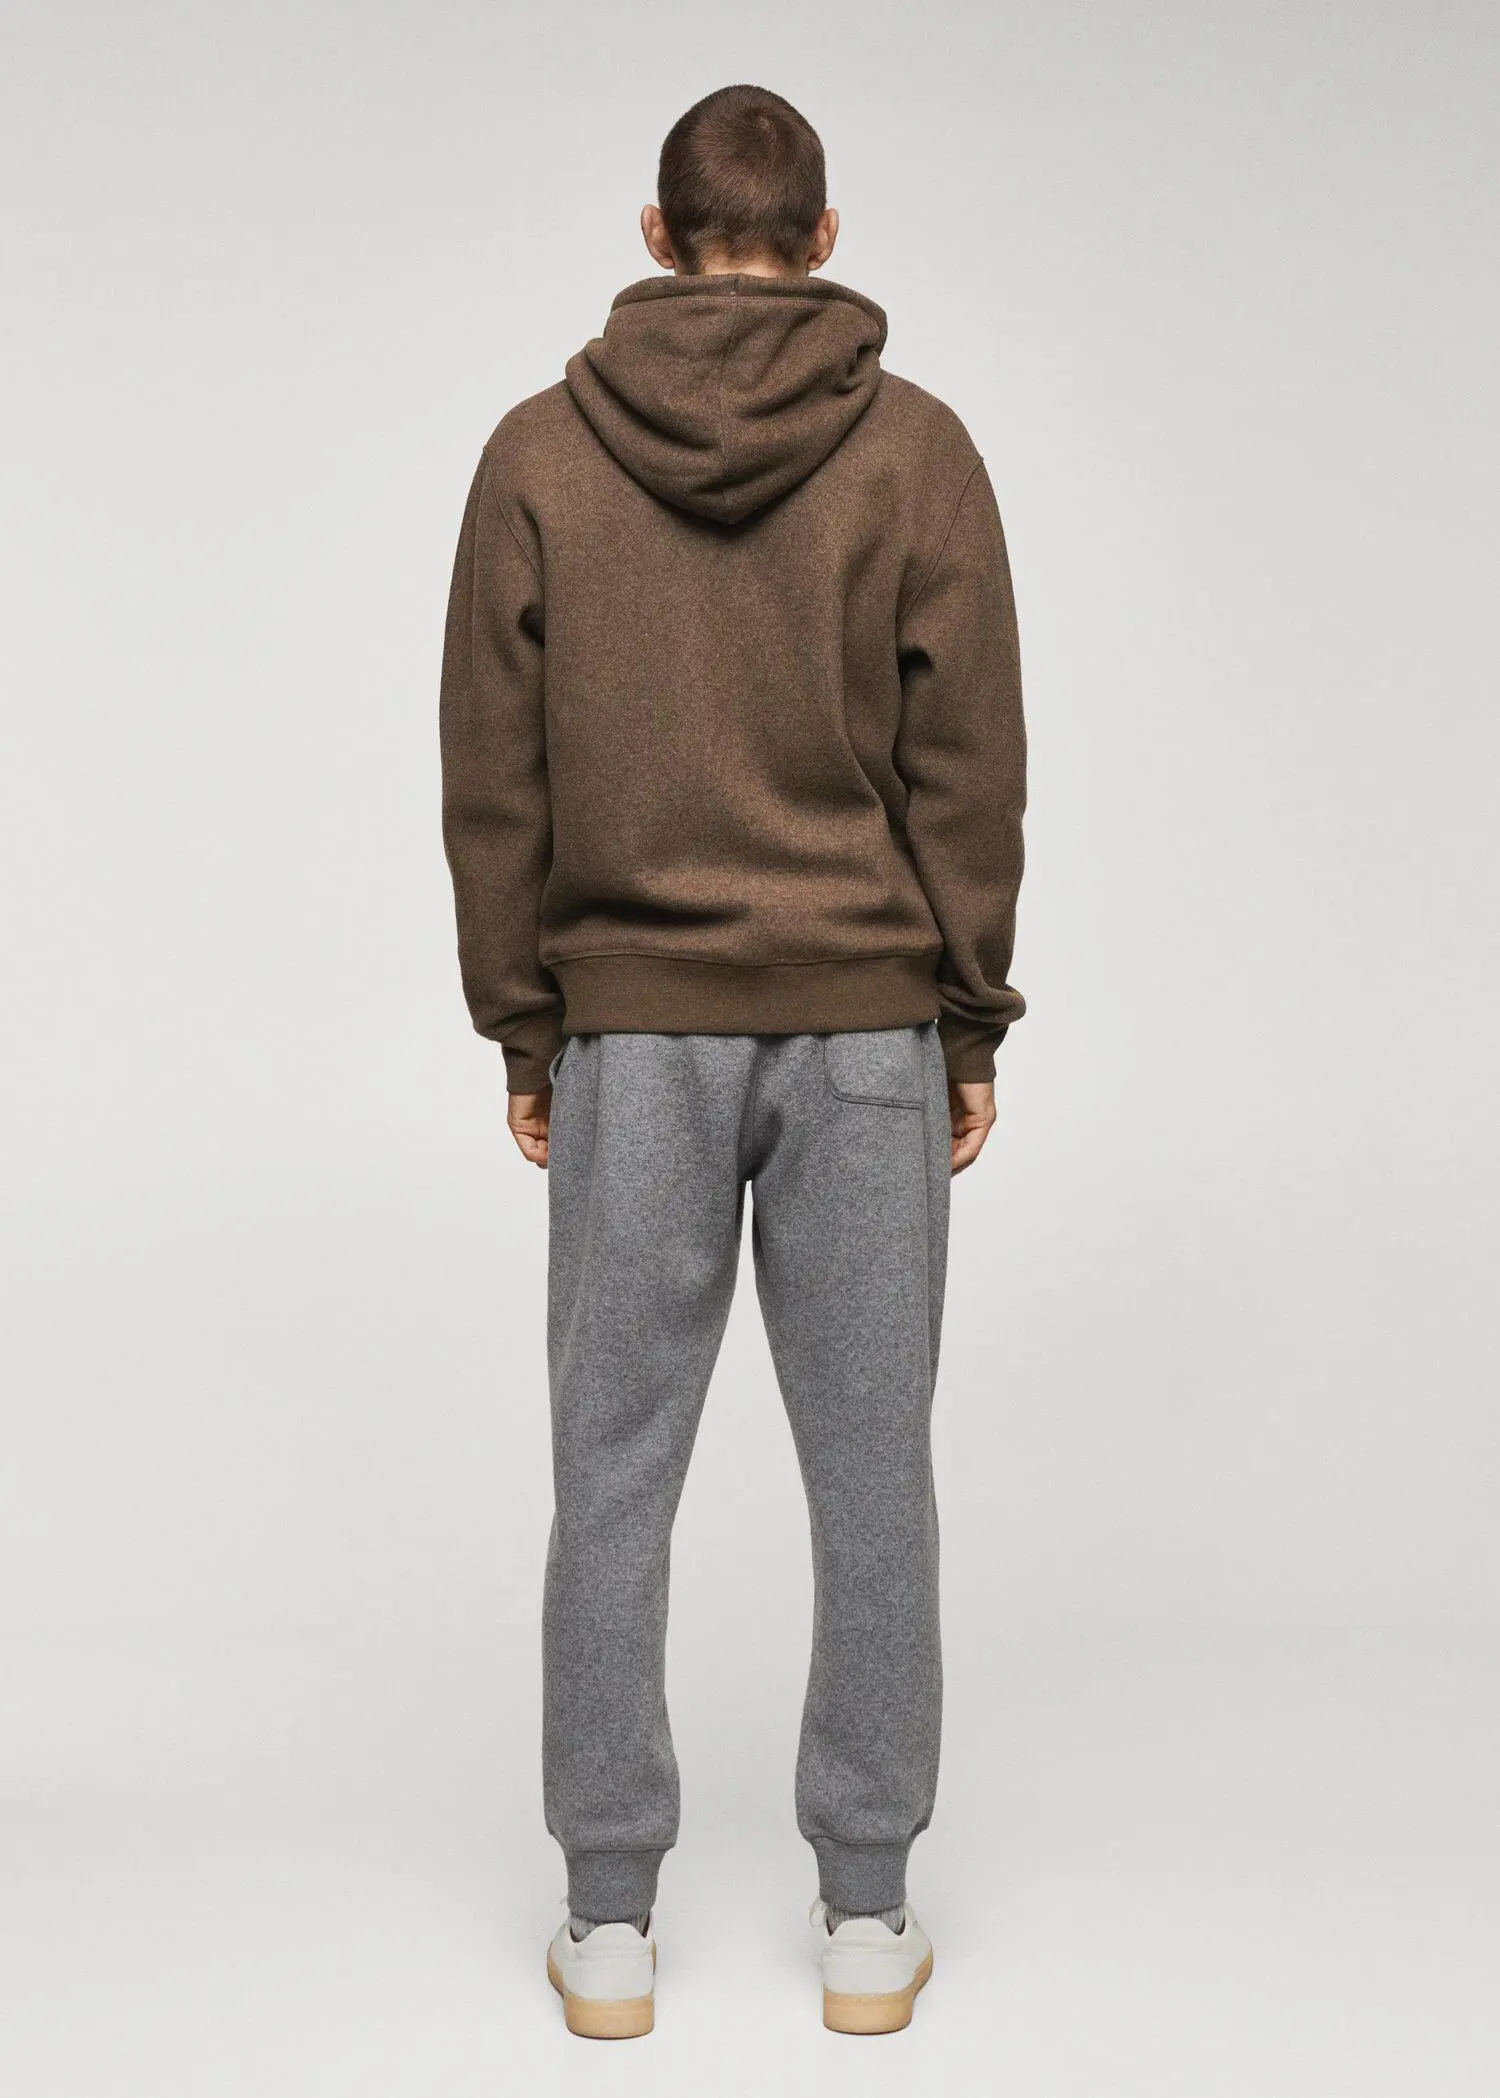 Mango Wool blend hooded sweatshirt. 3